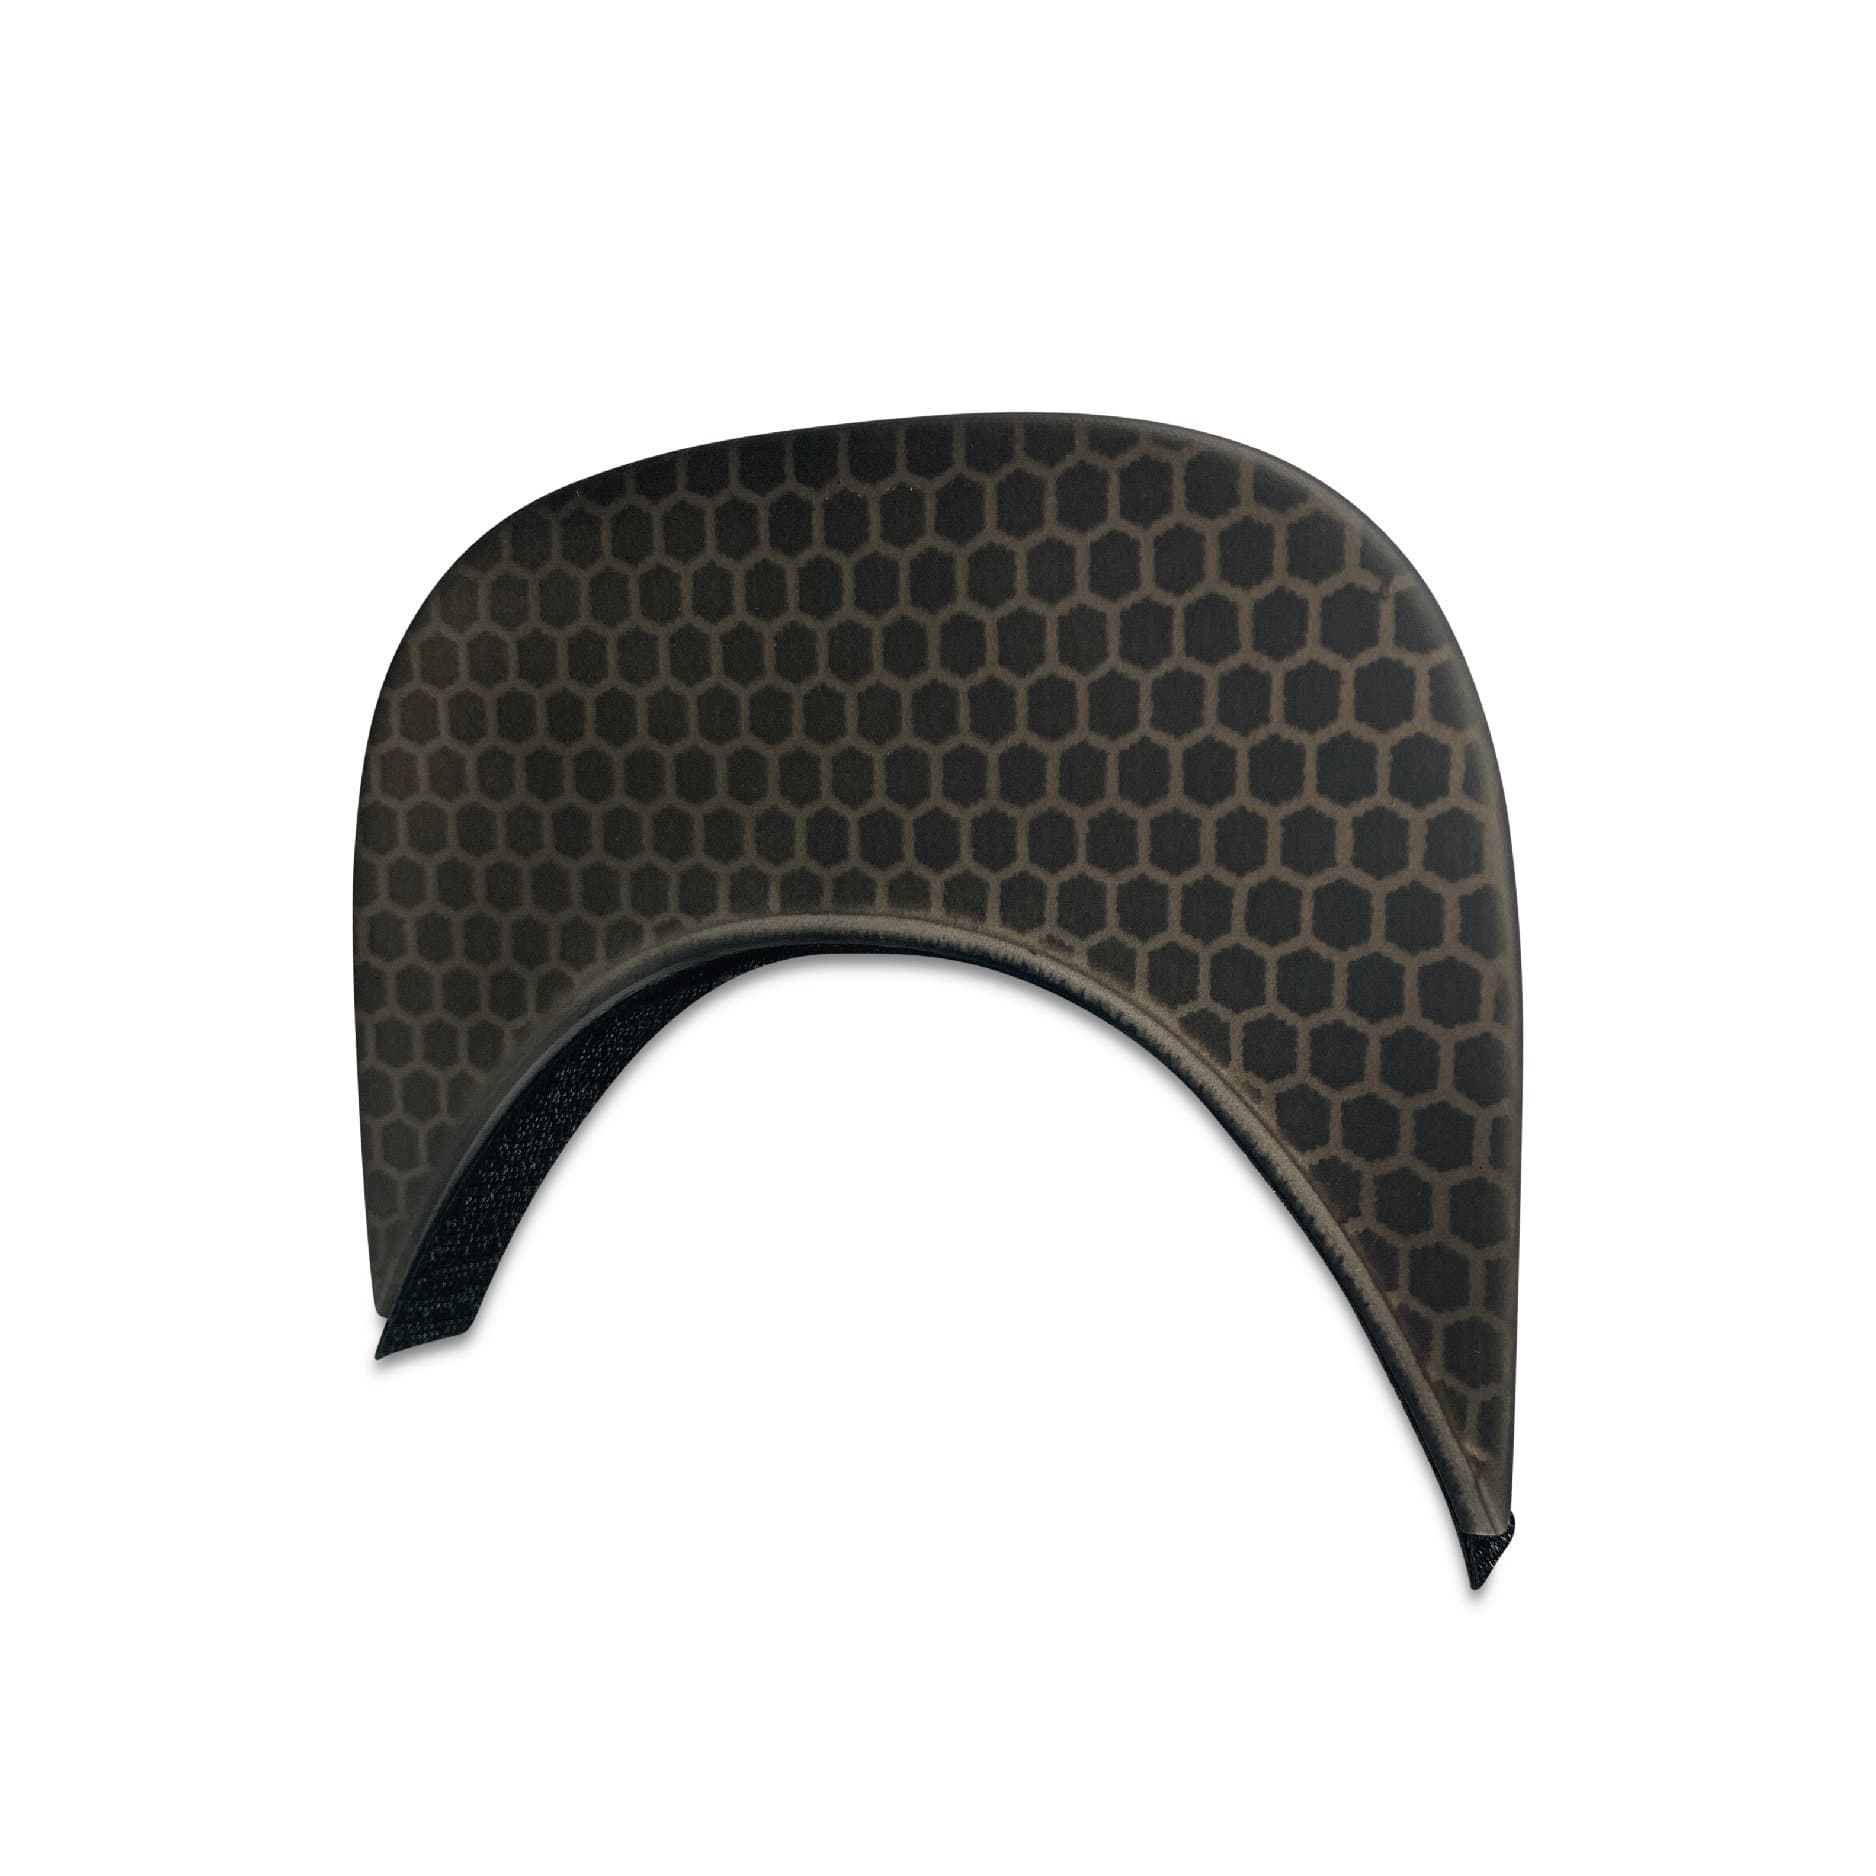 Black 6 Panel Cap Set | Black Surf + Free Fabric Visor